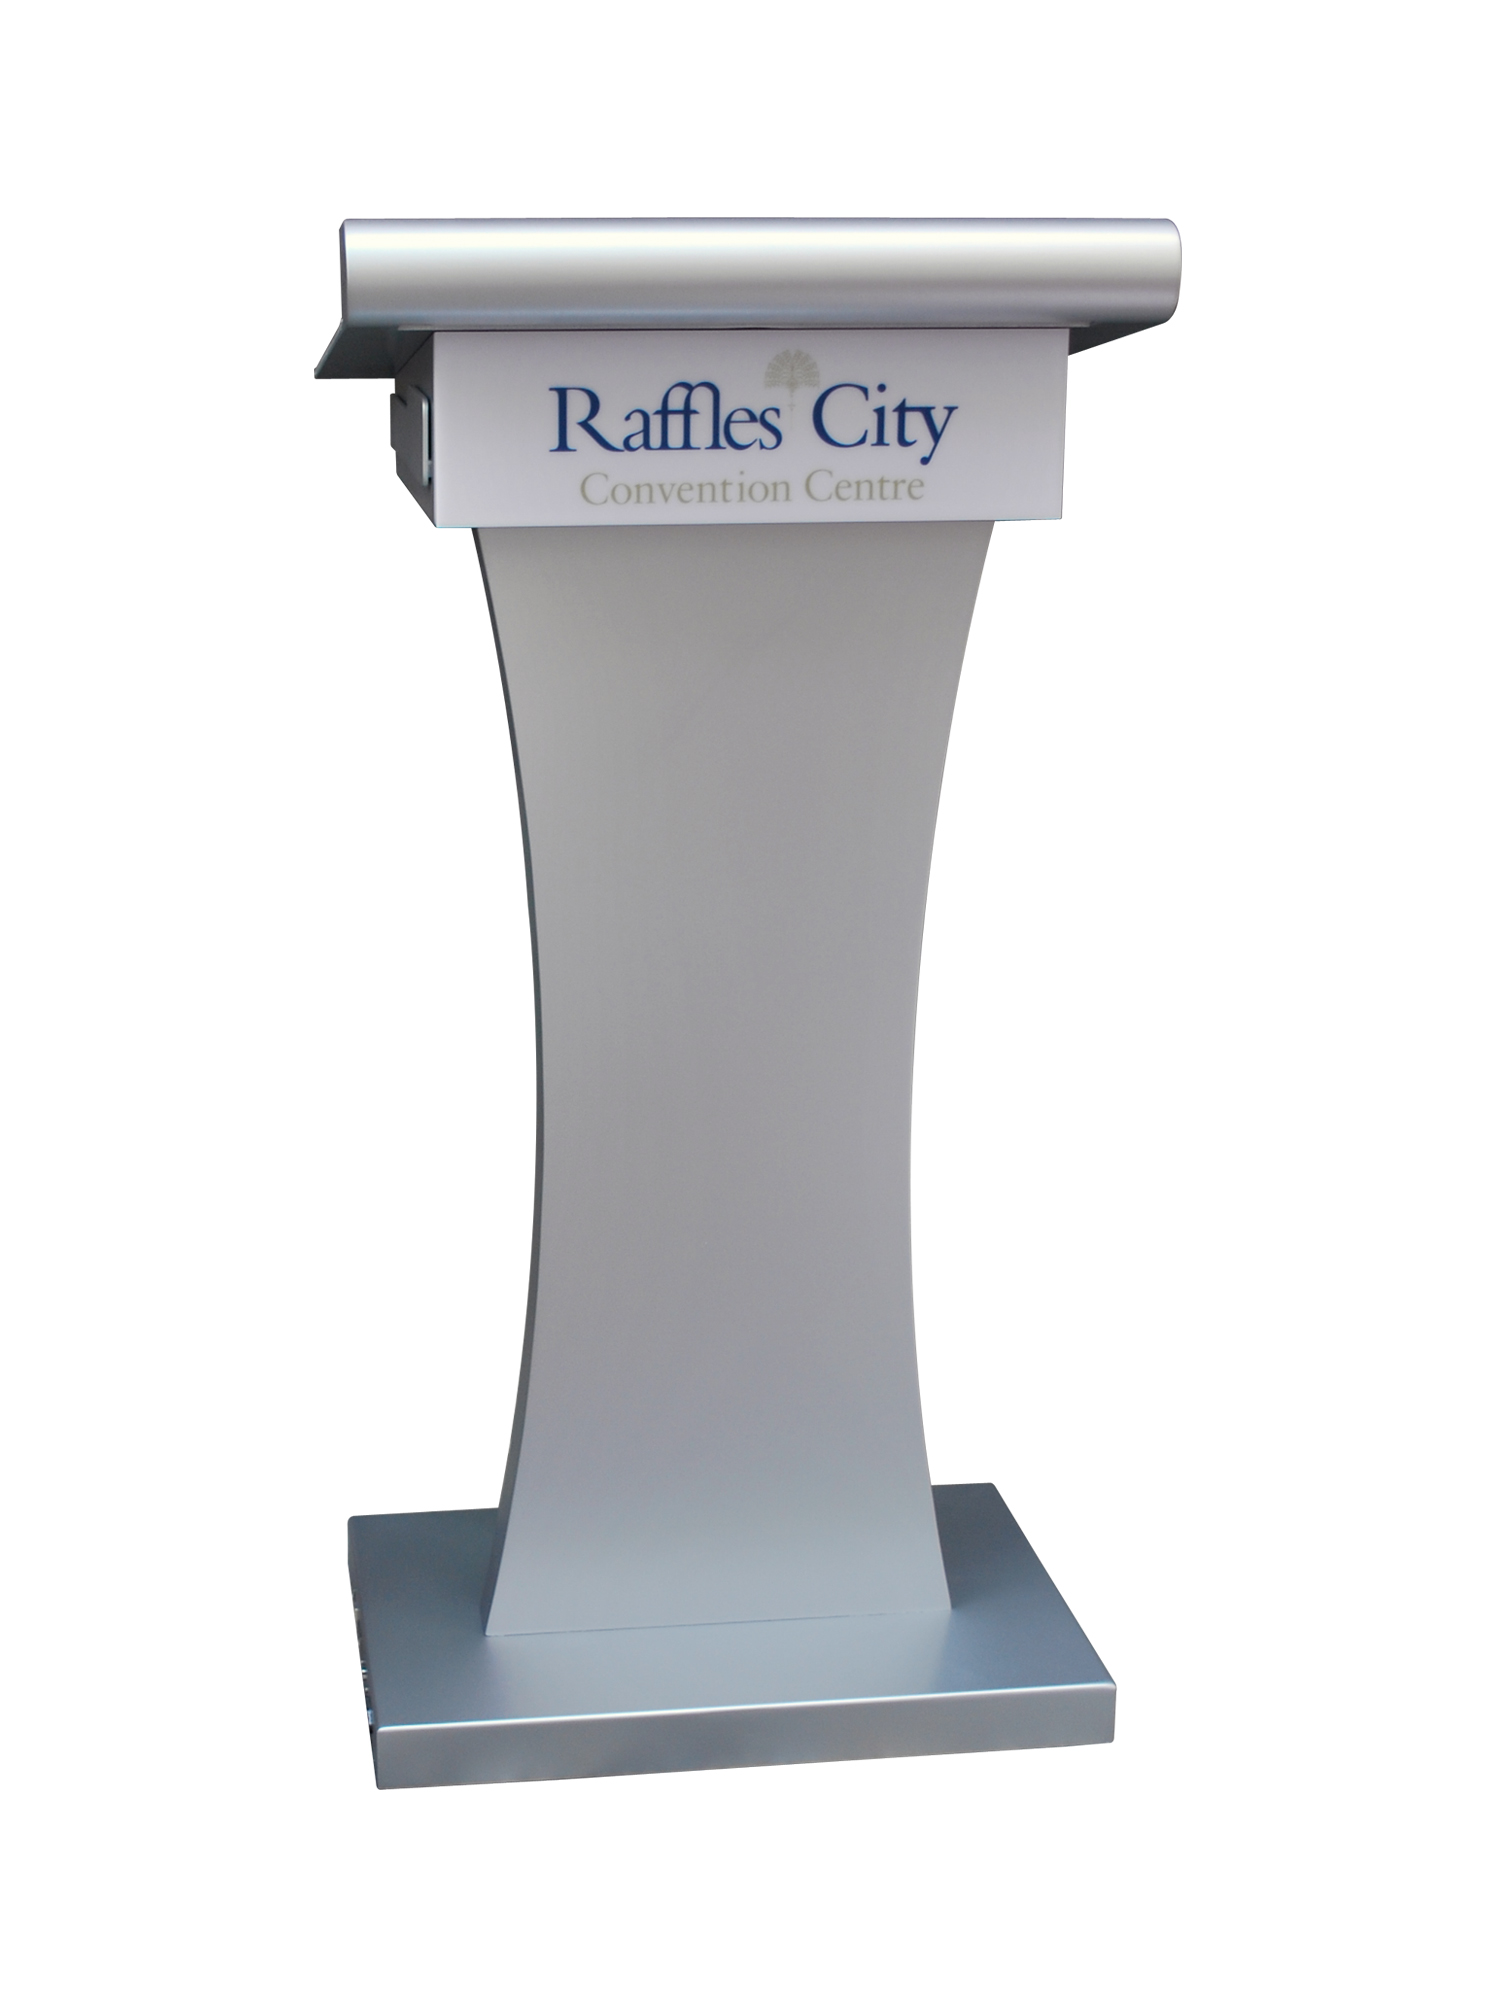 Raffles City Convention Centre (RCCC)